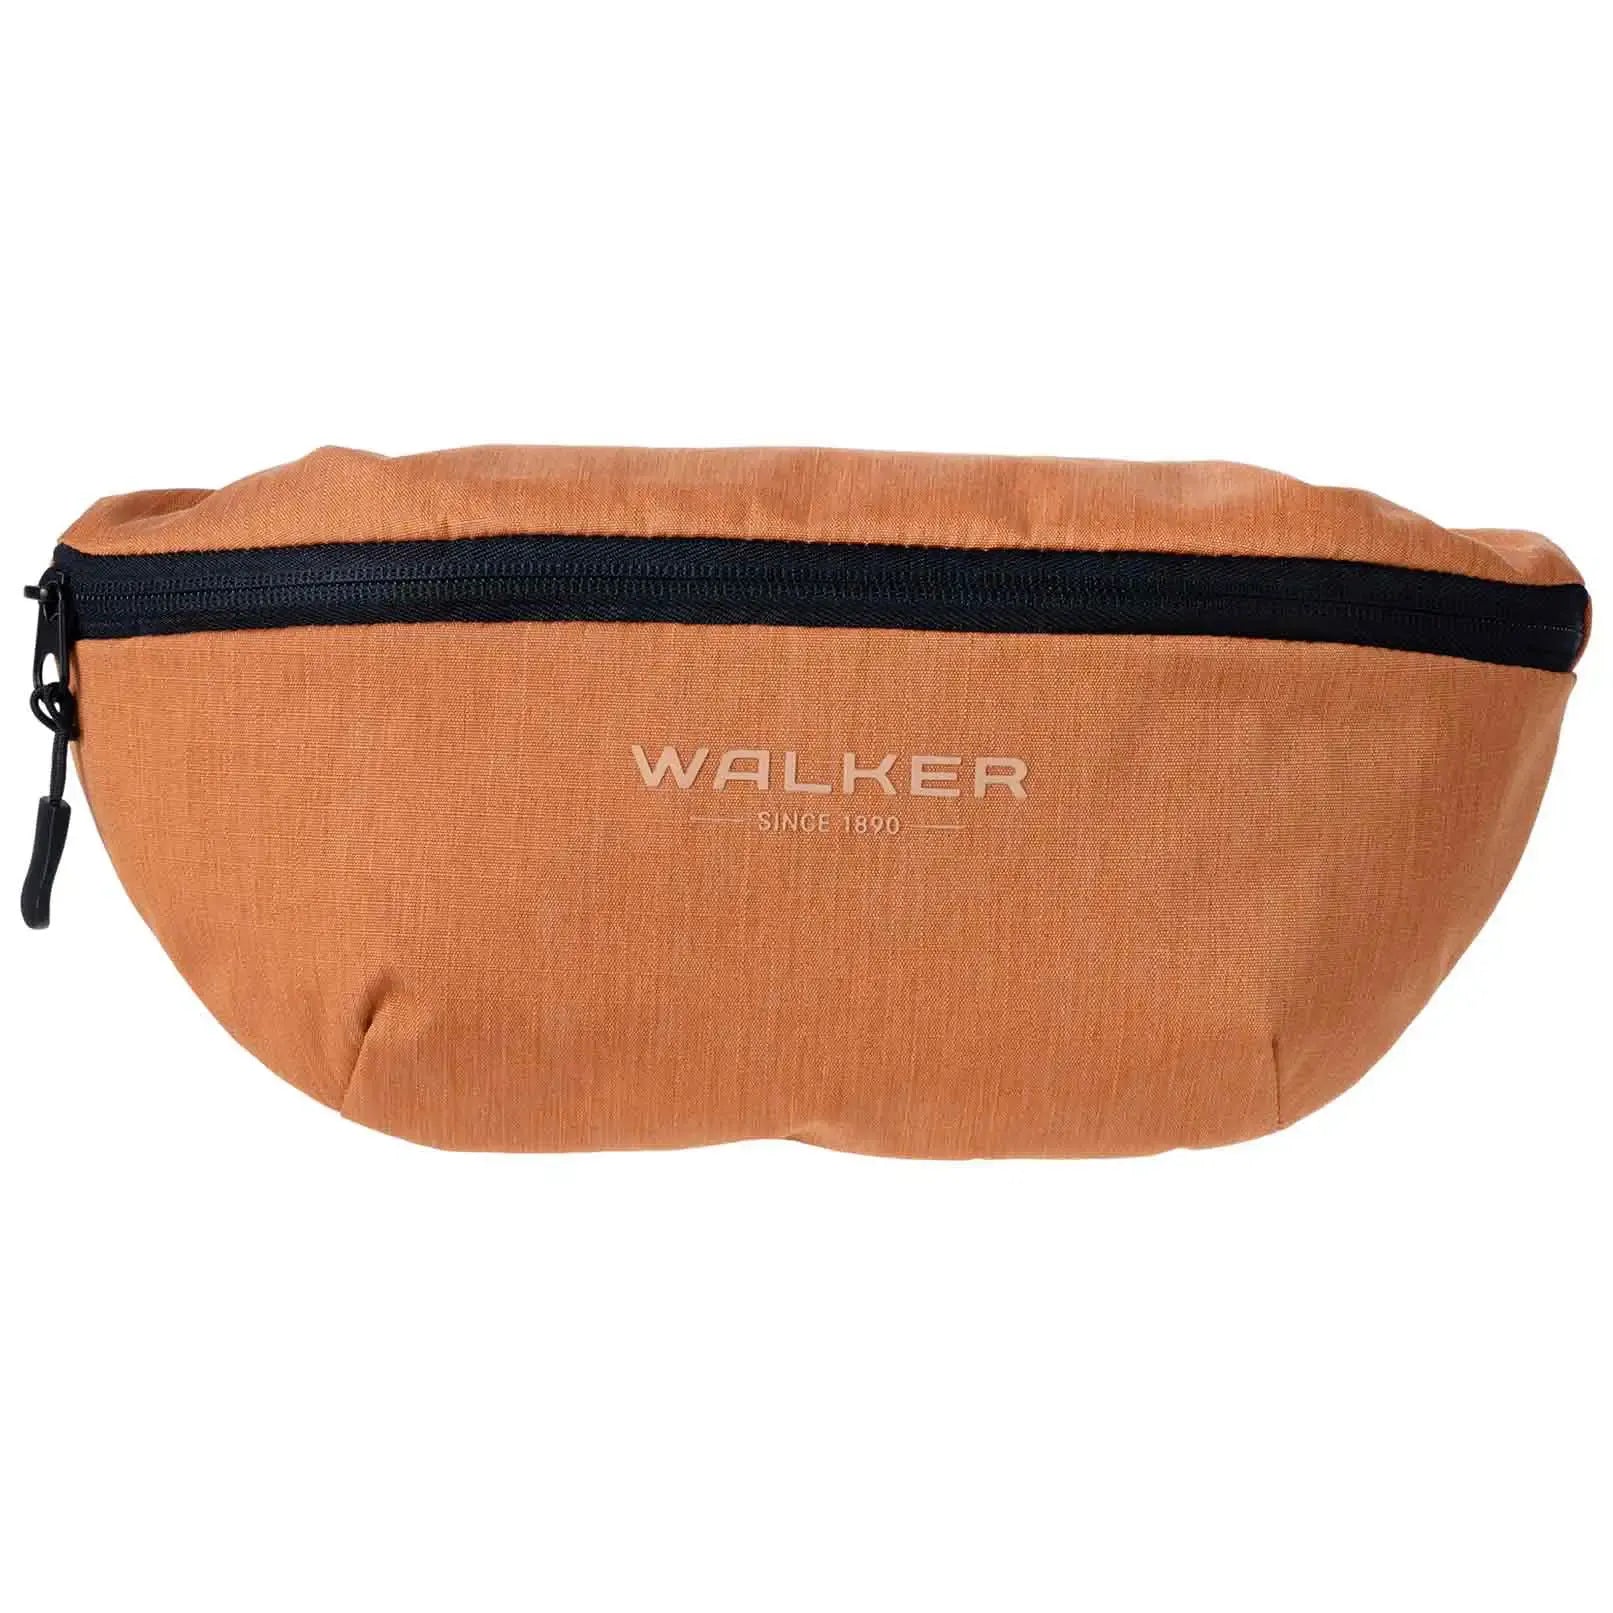 Walker Finn Concept Lifestyle belt bag 31 cm - Coconut